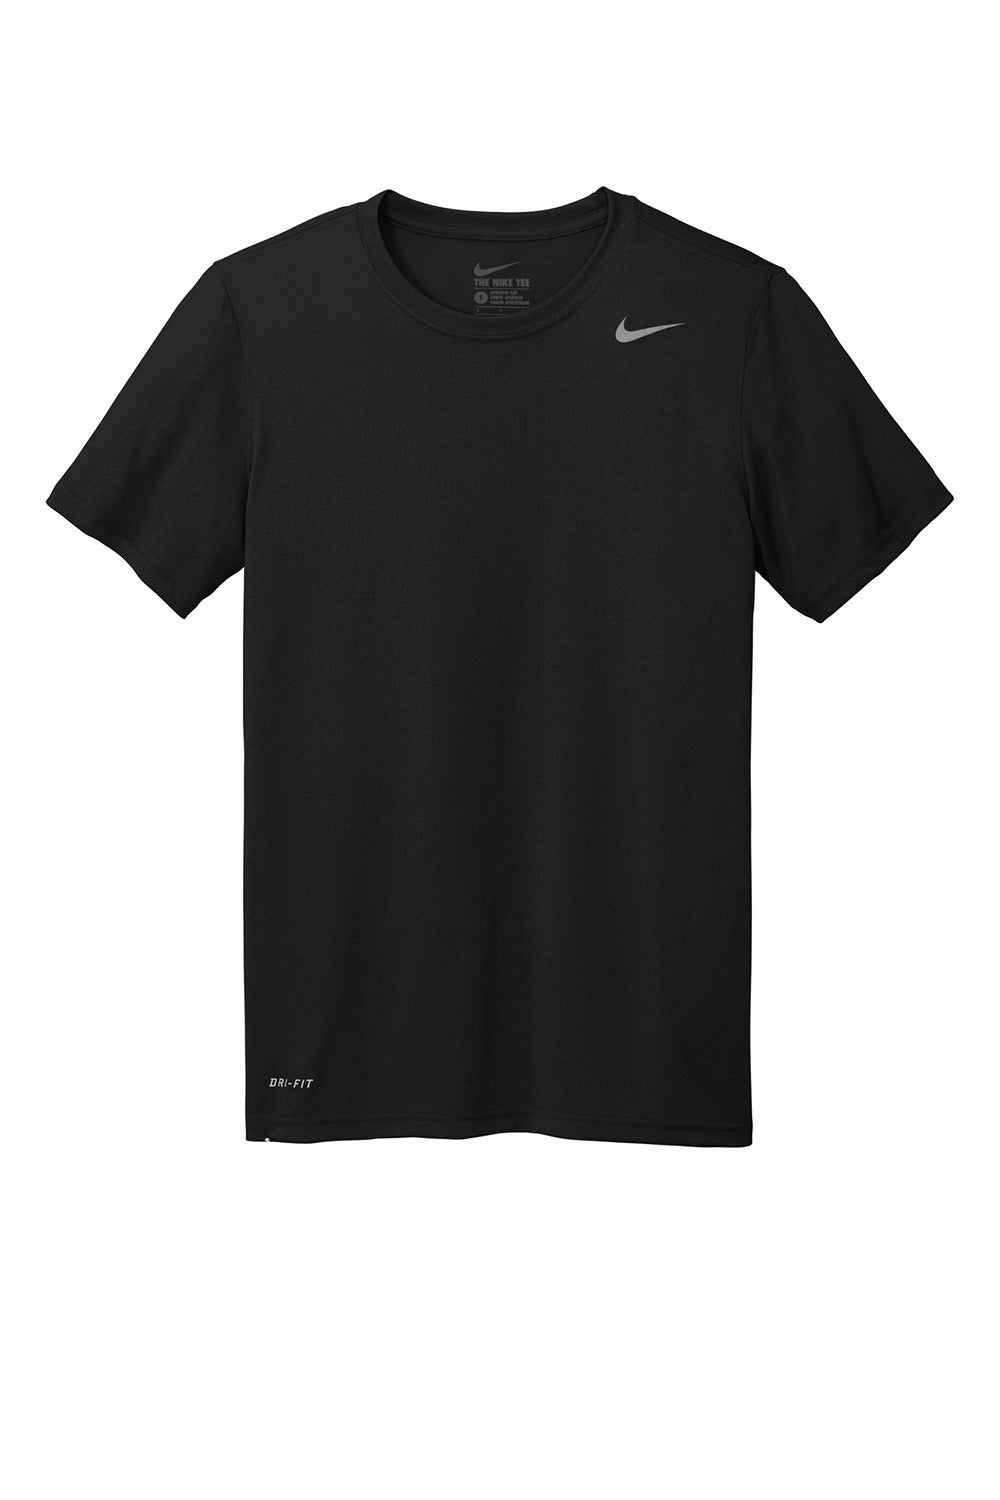 Nike 727982 Mens Legend Dri-Fit Moisture Wicking Short Sleeve Crewneck T-Shirt Black Flat Front